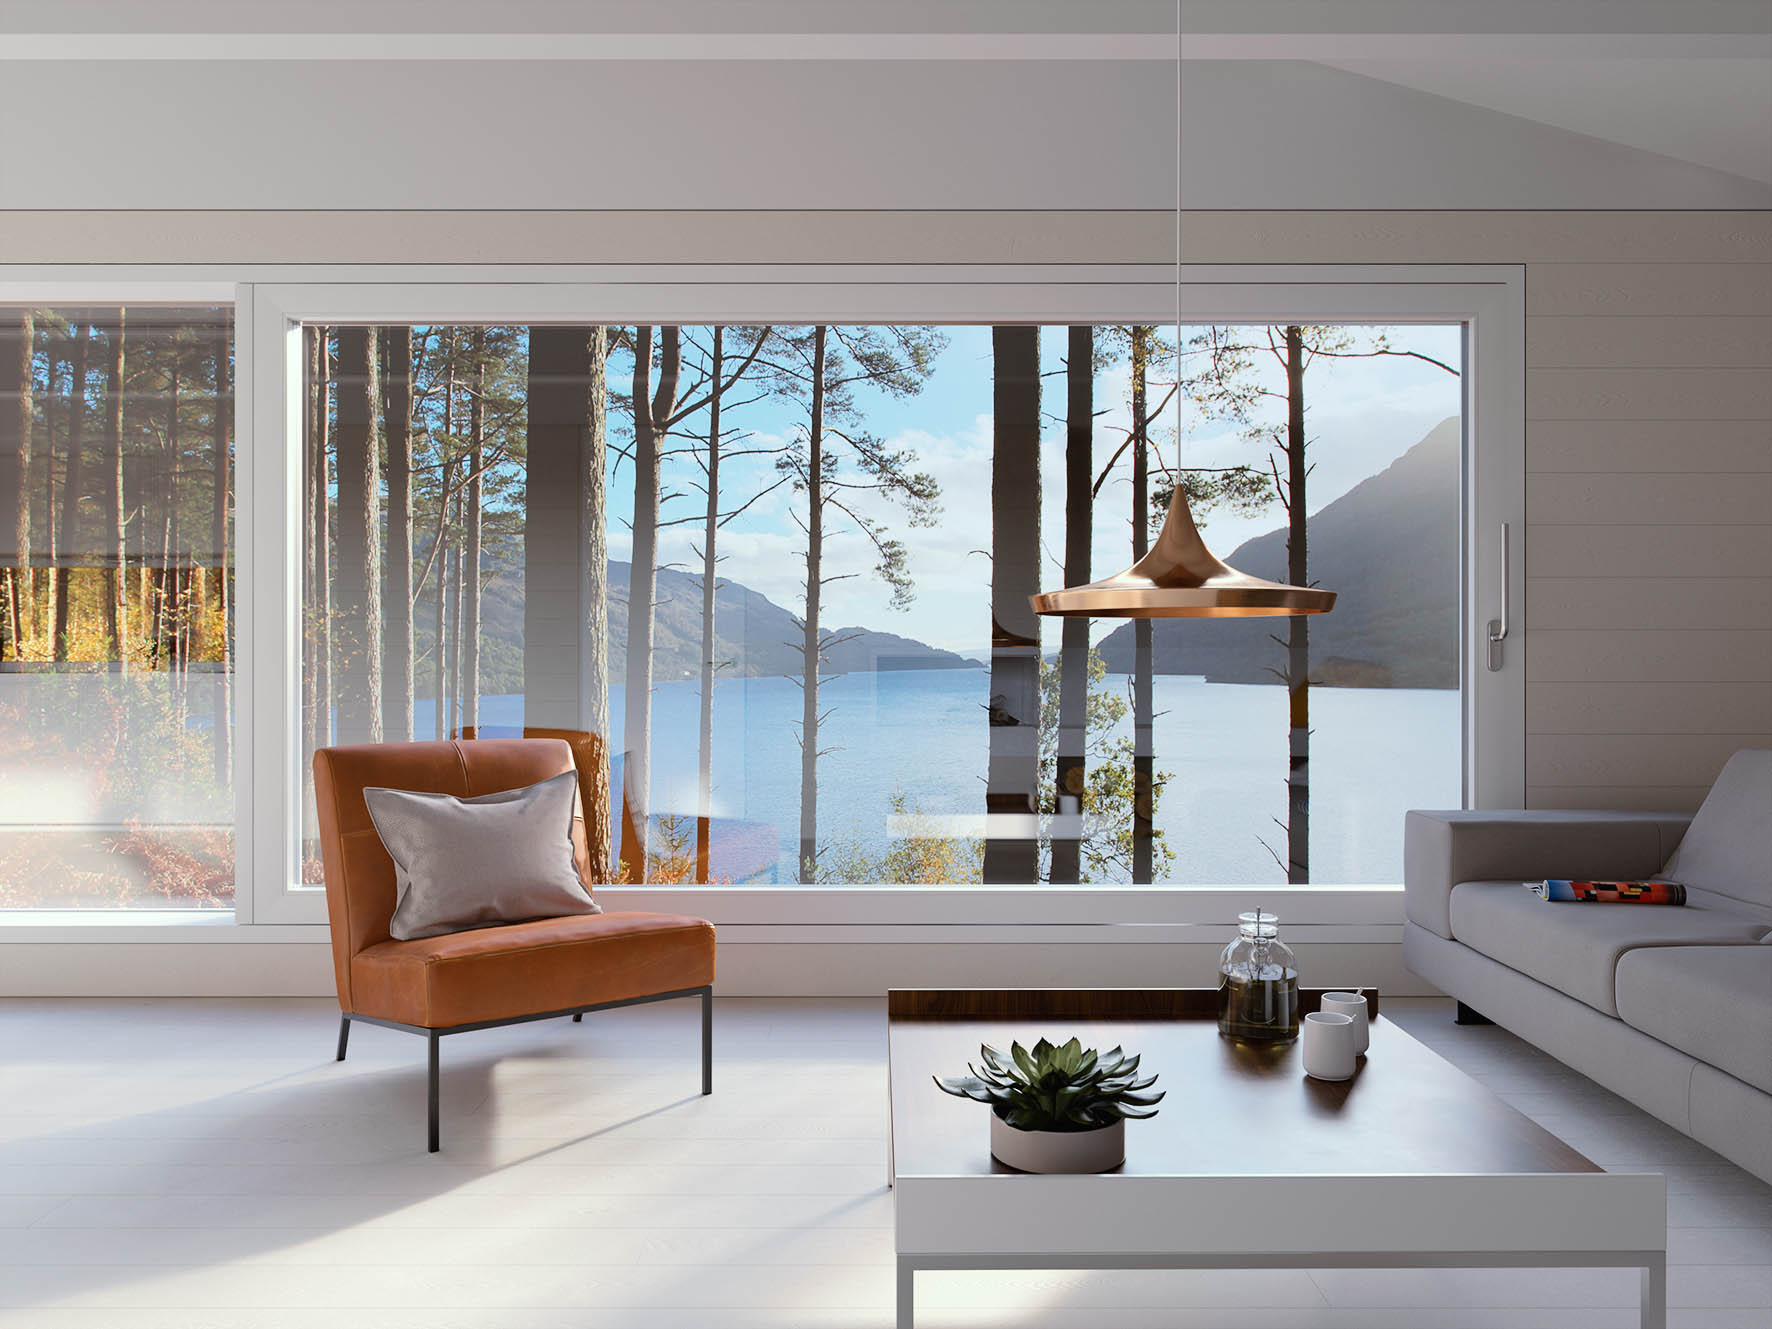 Best 10 Minimalist Home Design Interior Ideas You Need To Know - Reverasite